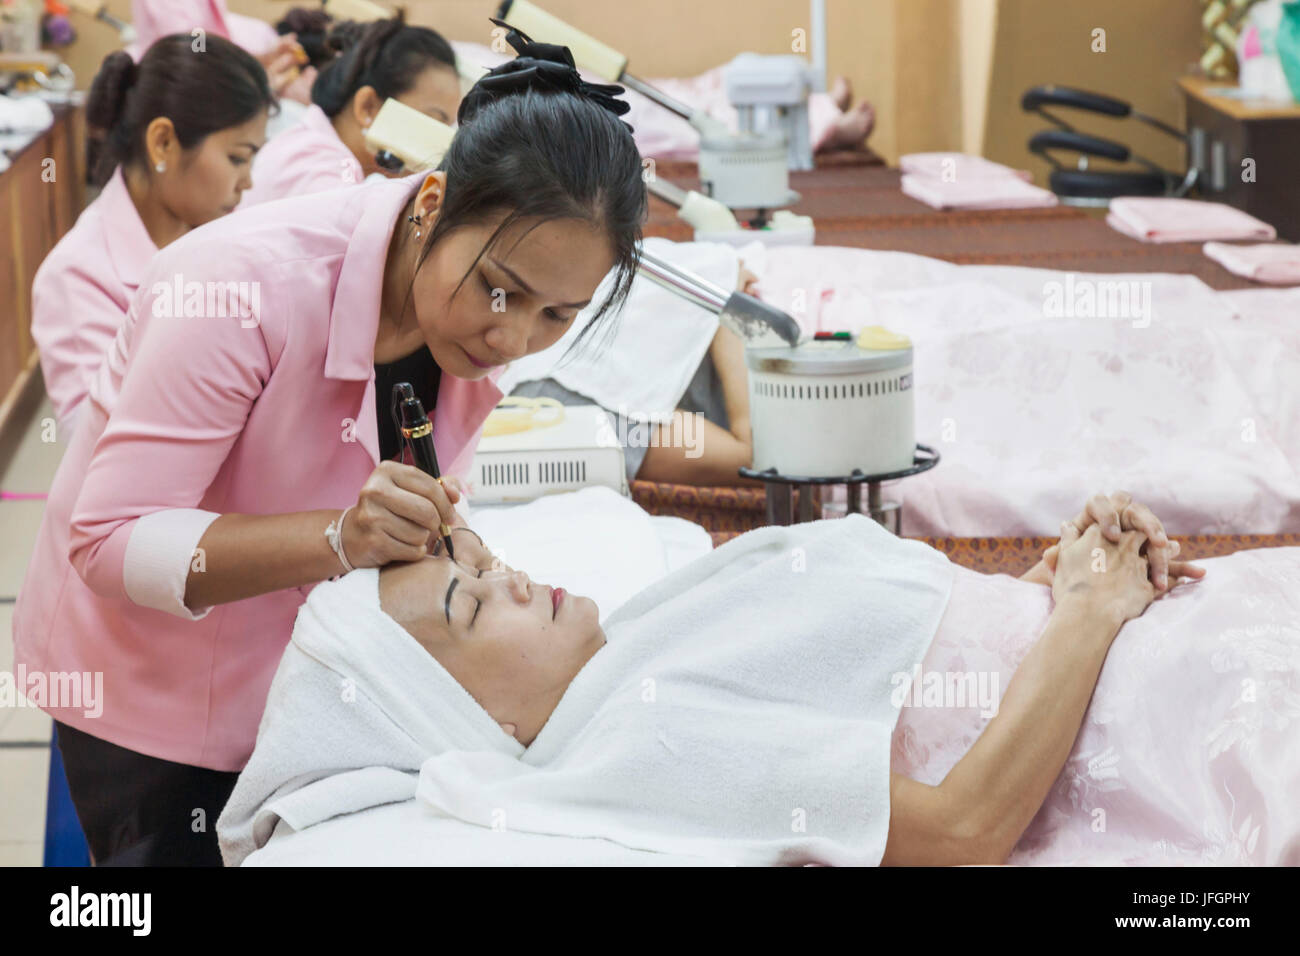 Thailand, Bangkok, Khaosan Road, Woman Receiving Typical Beauty Treatment Stock Photo